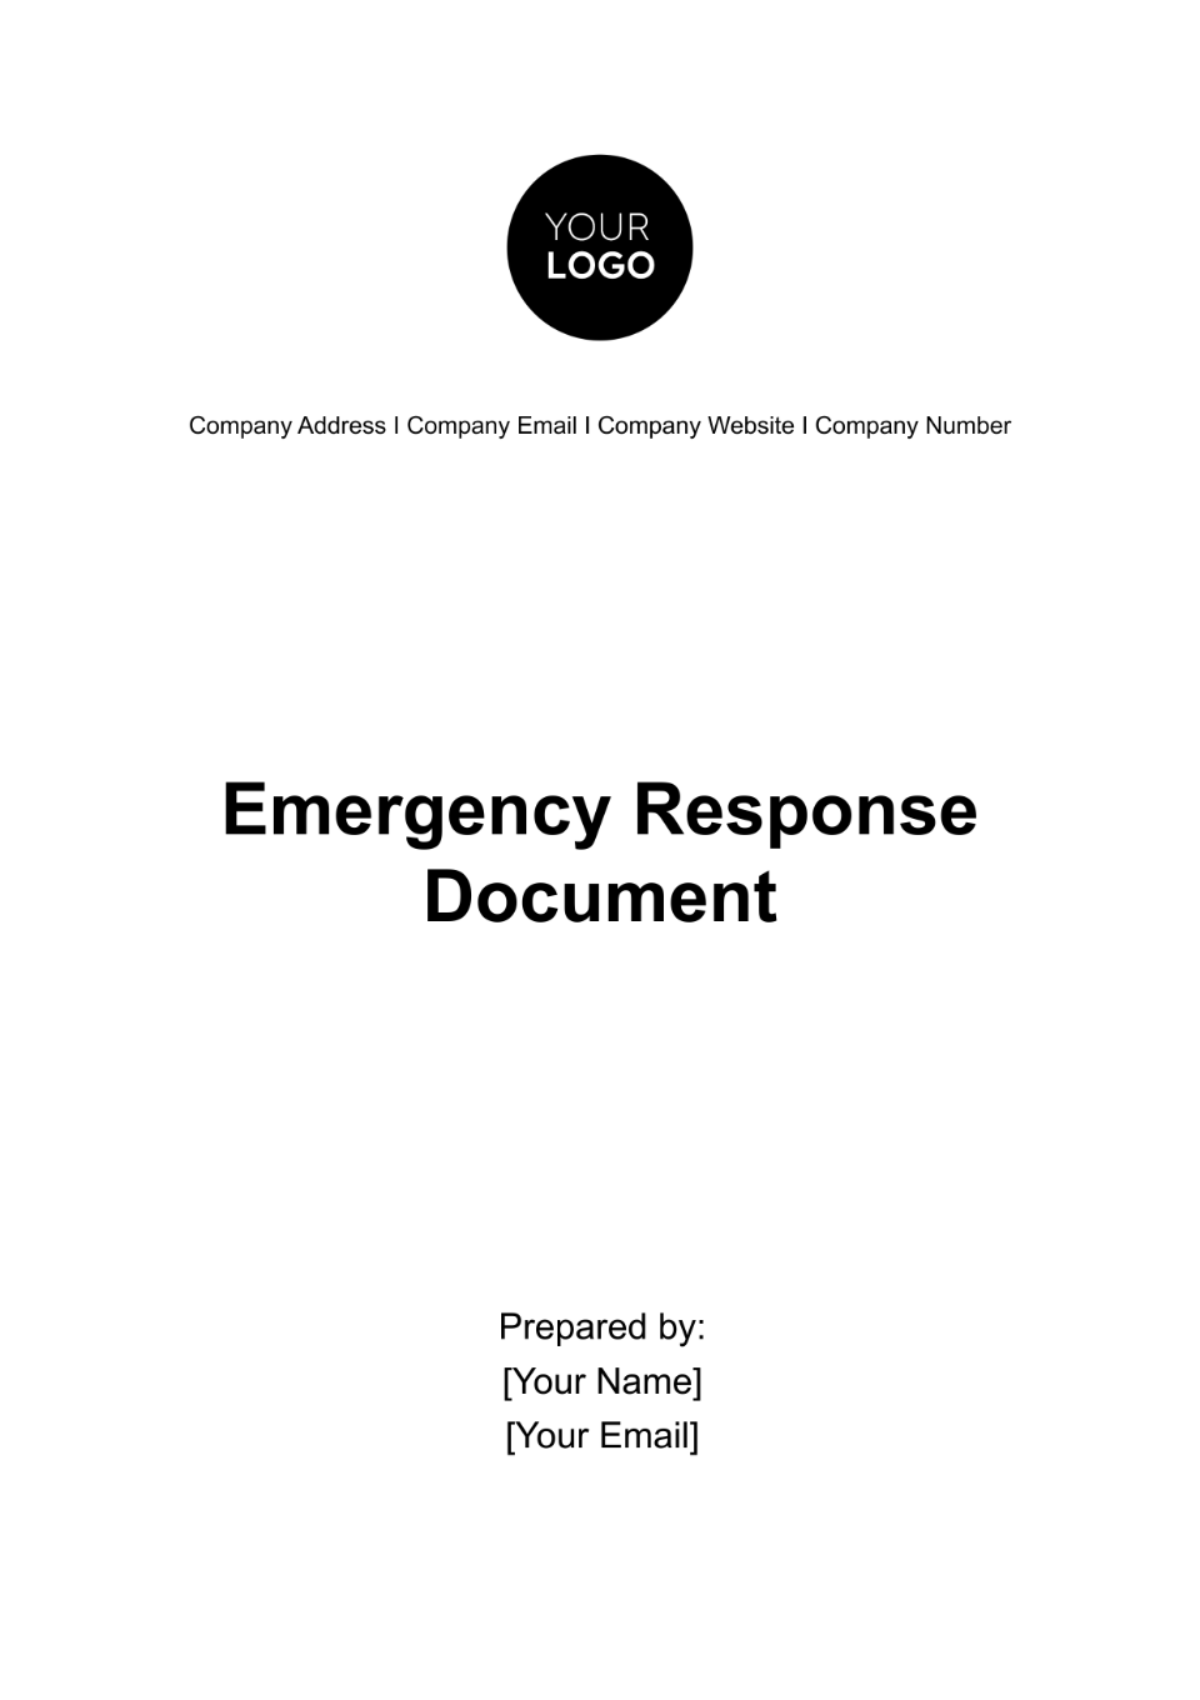 Emergency Response Document Template